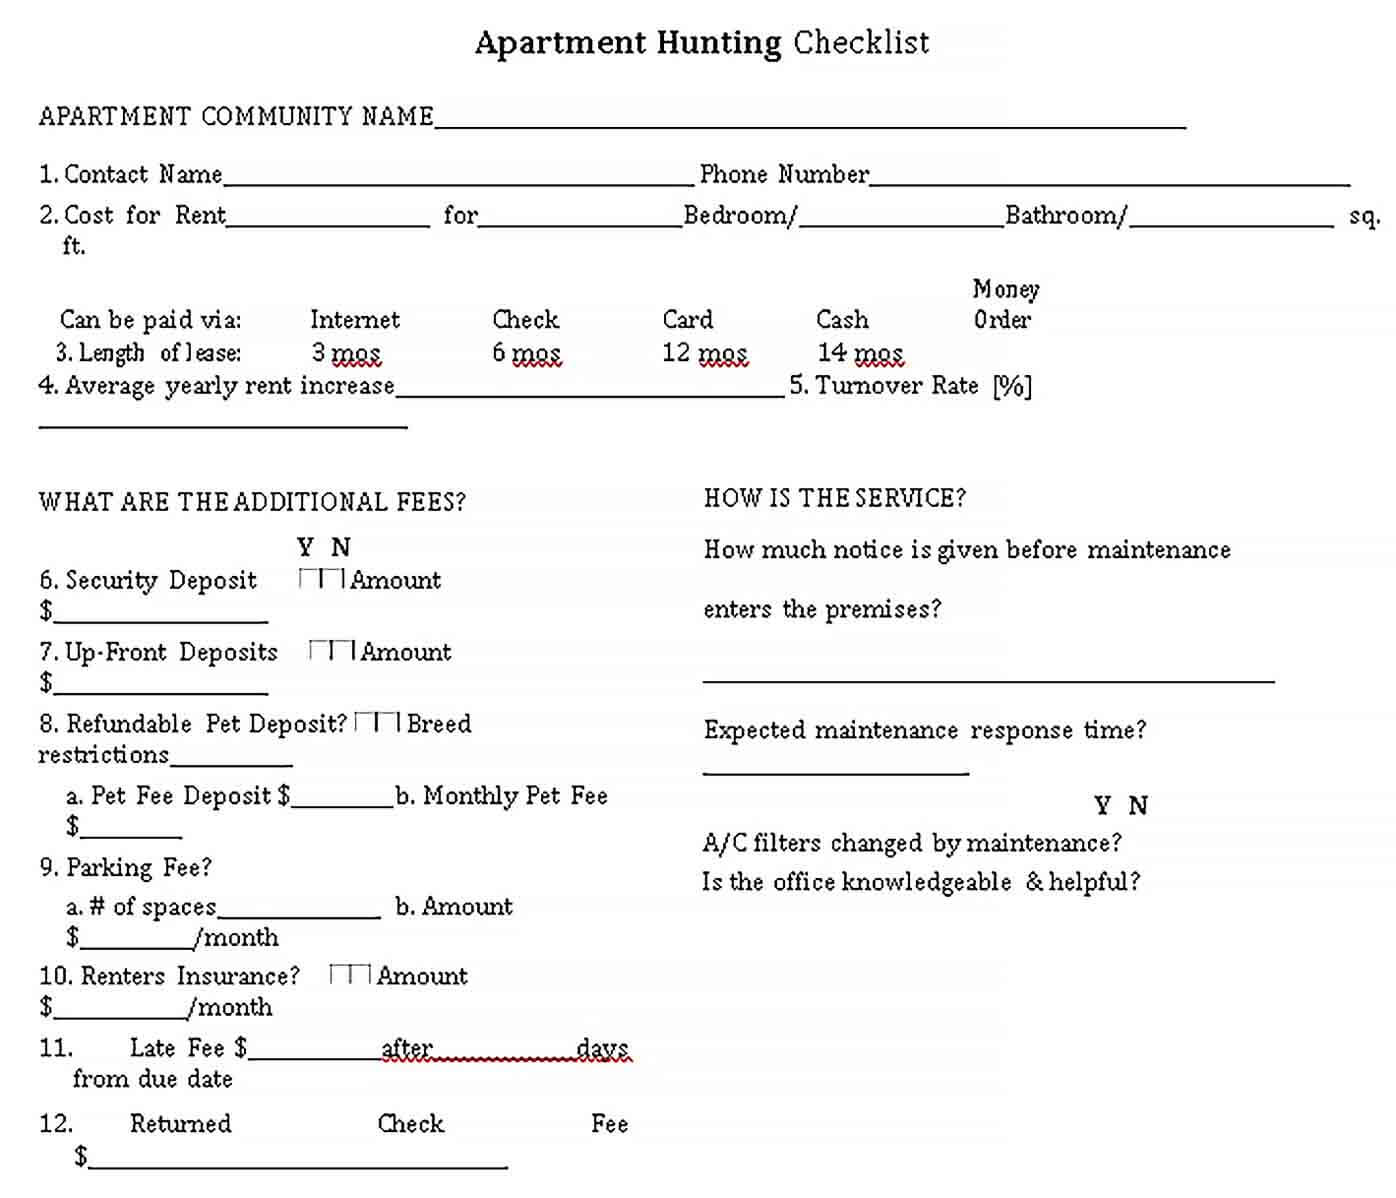 Sample New Apartment Hunting Checklist